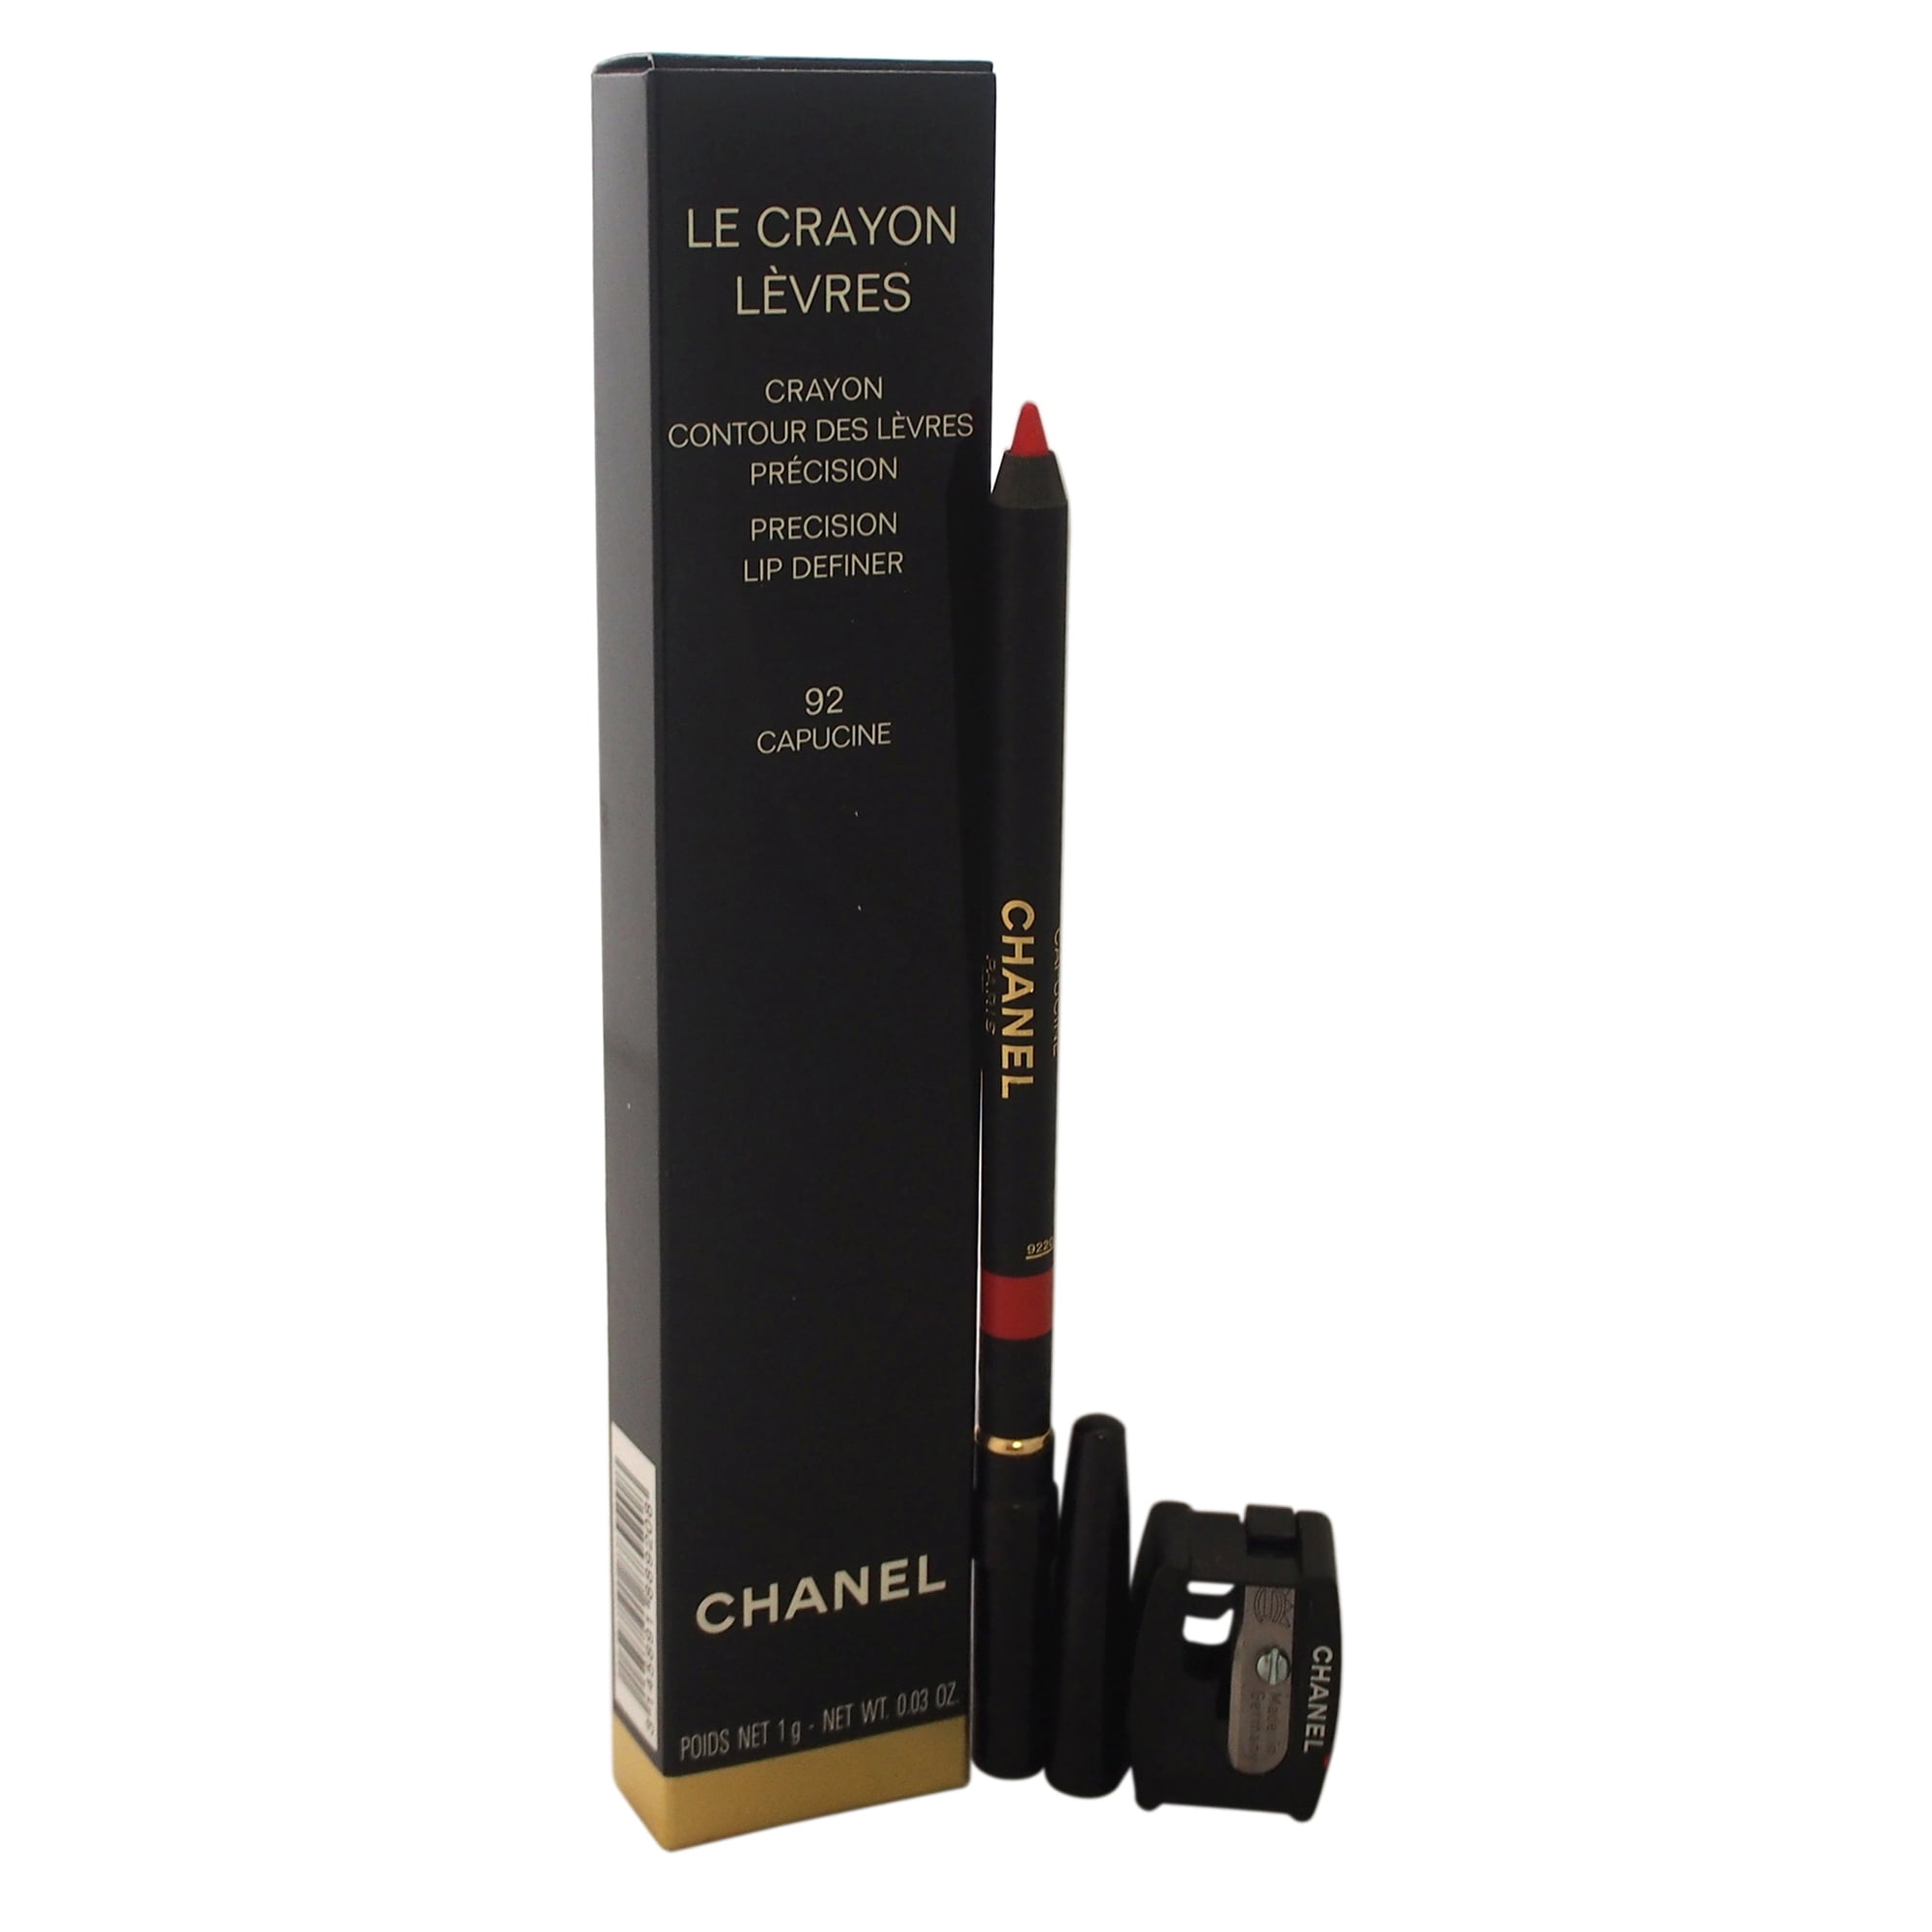 Le Crayon Levres - 92 Capucine by Chanel for Women - 0.03 oz Lipliner